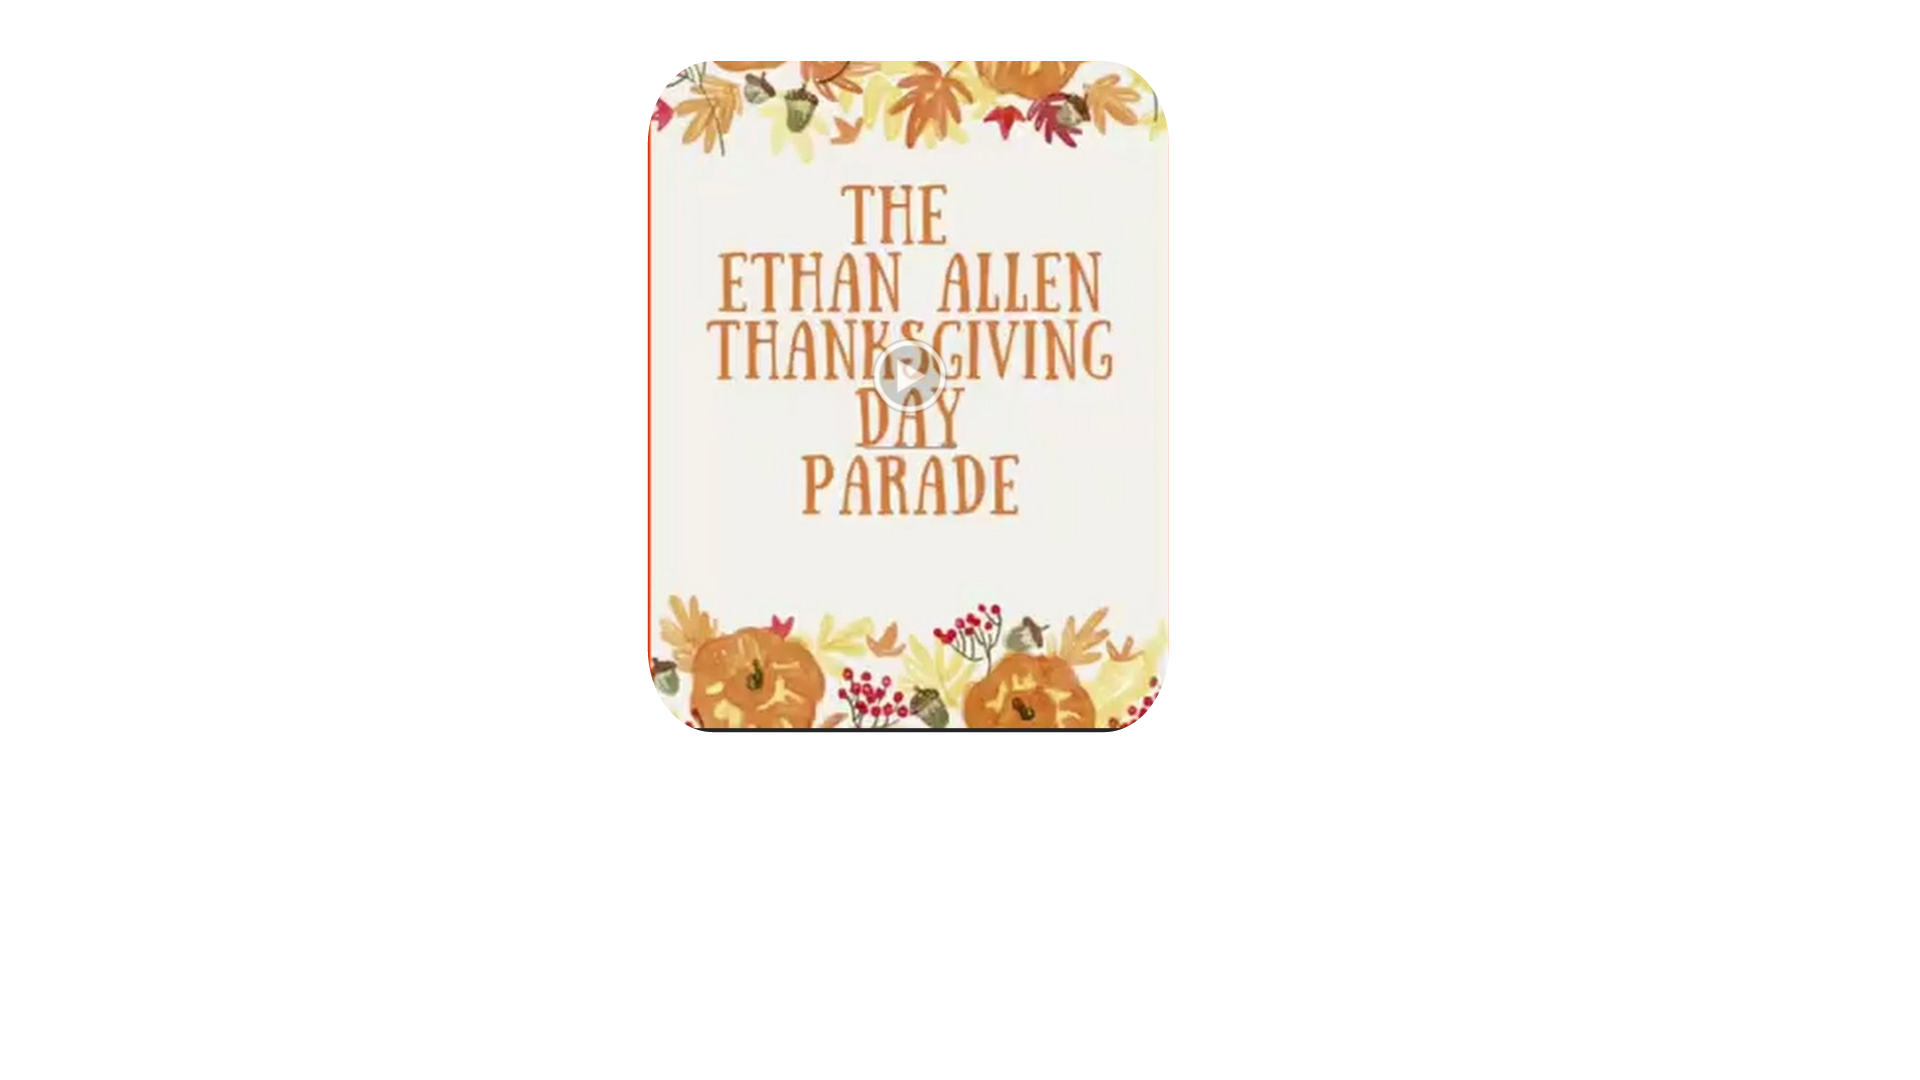 Ethan Allen Thanks giving Day Parade